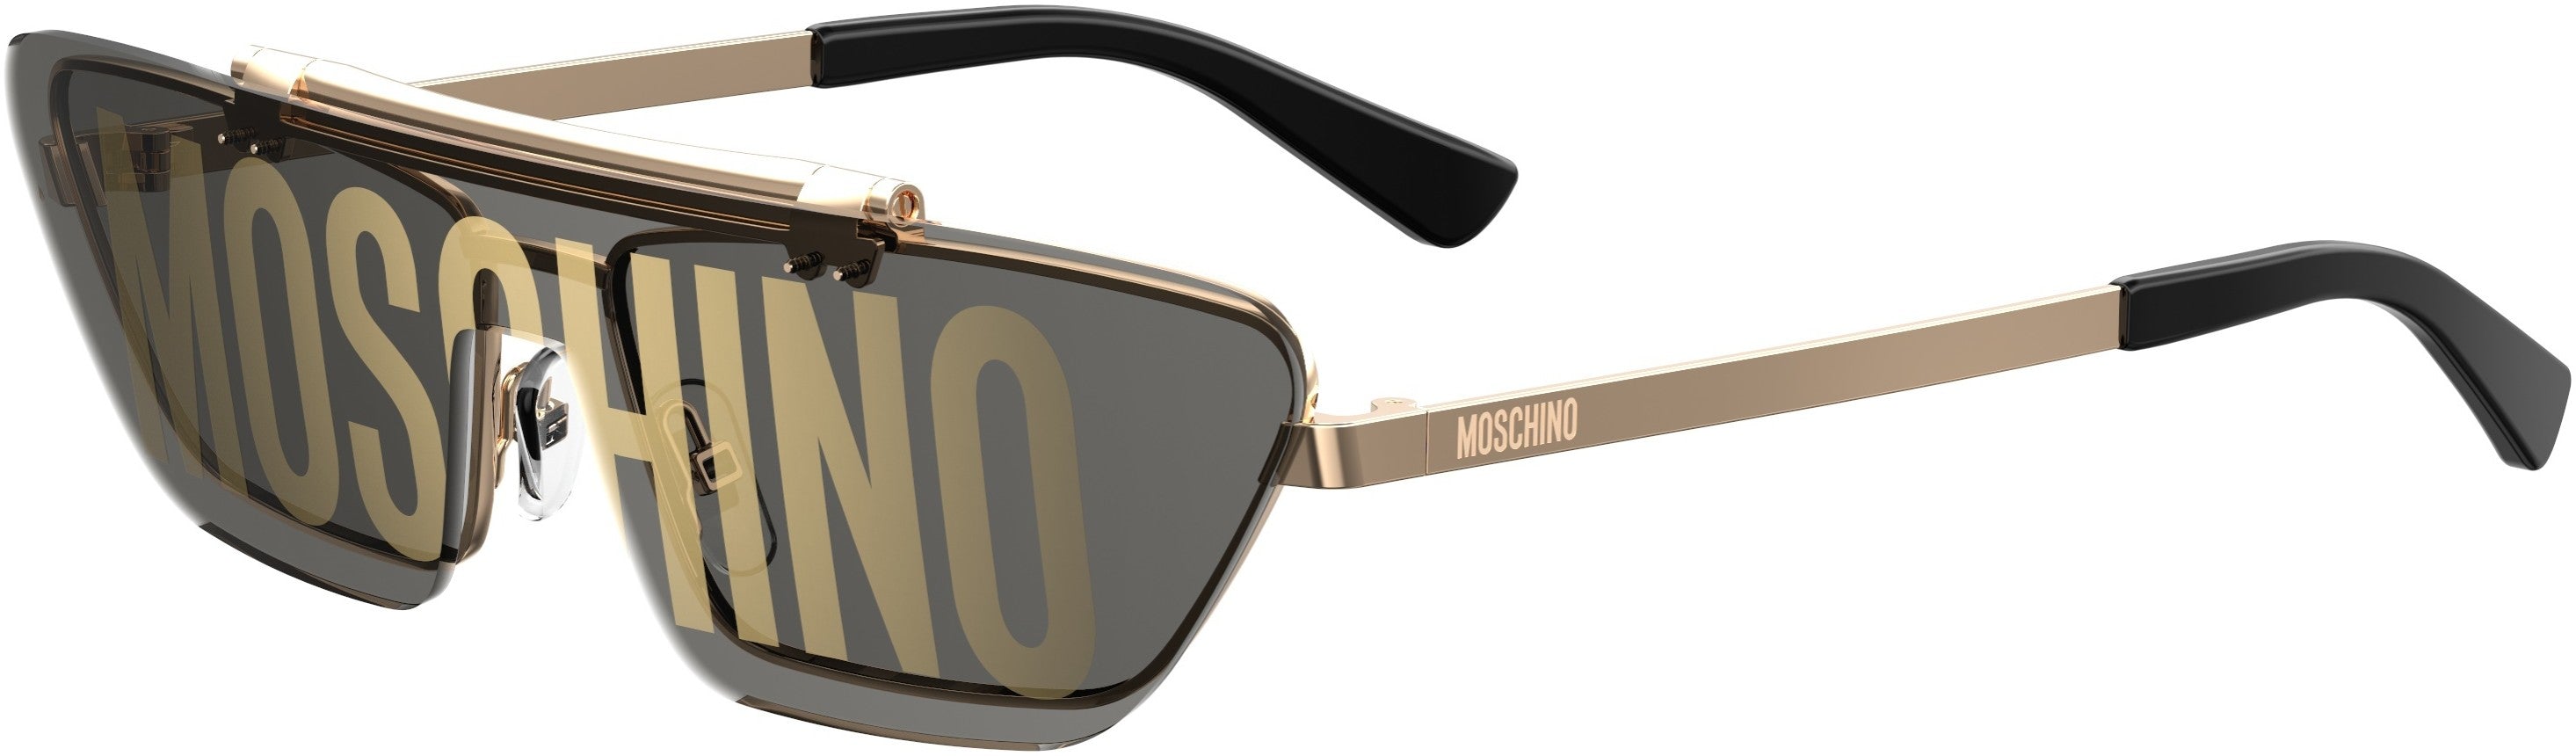  Moschino 048/S Special Shape Sunglasses 0000-0000  Rose Gold (0A Gold Decor)